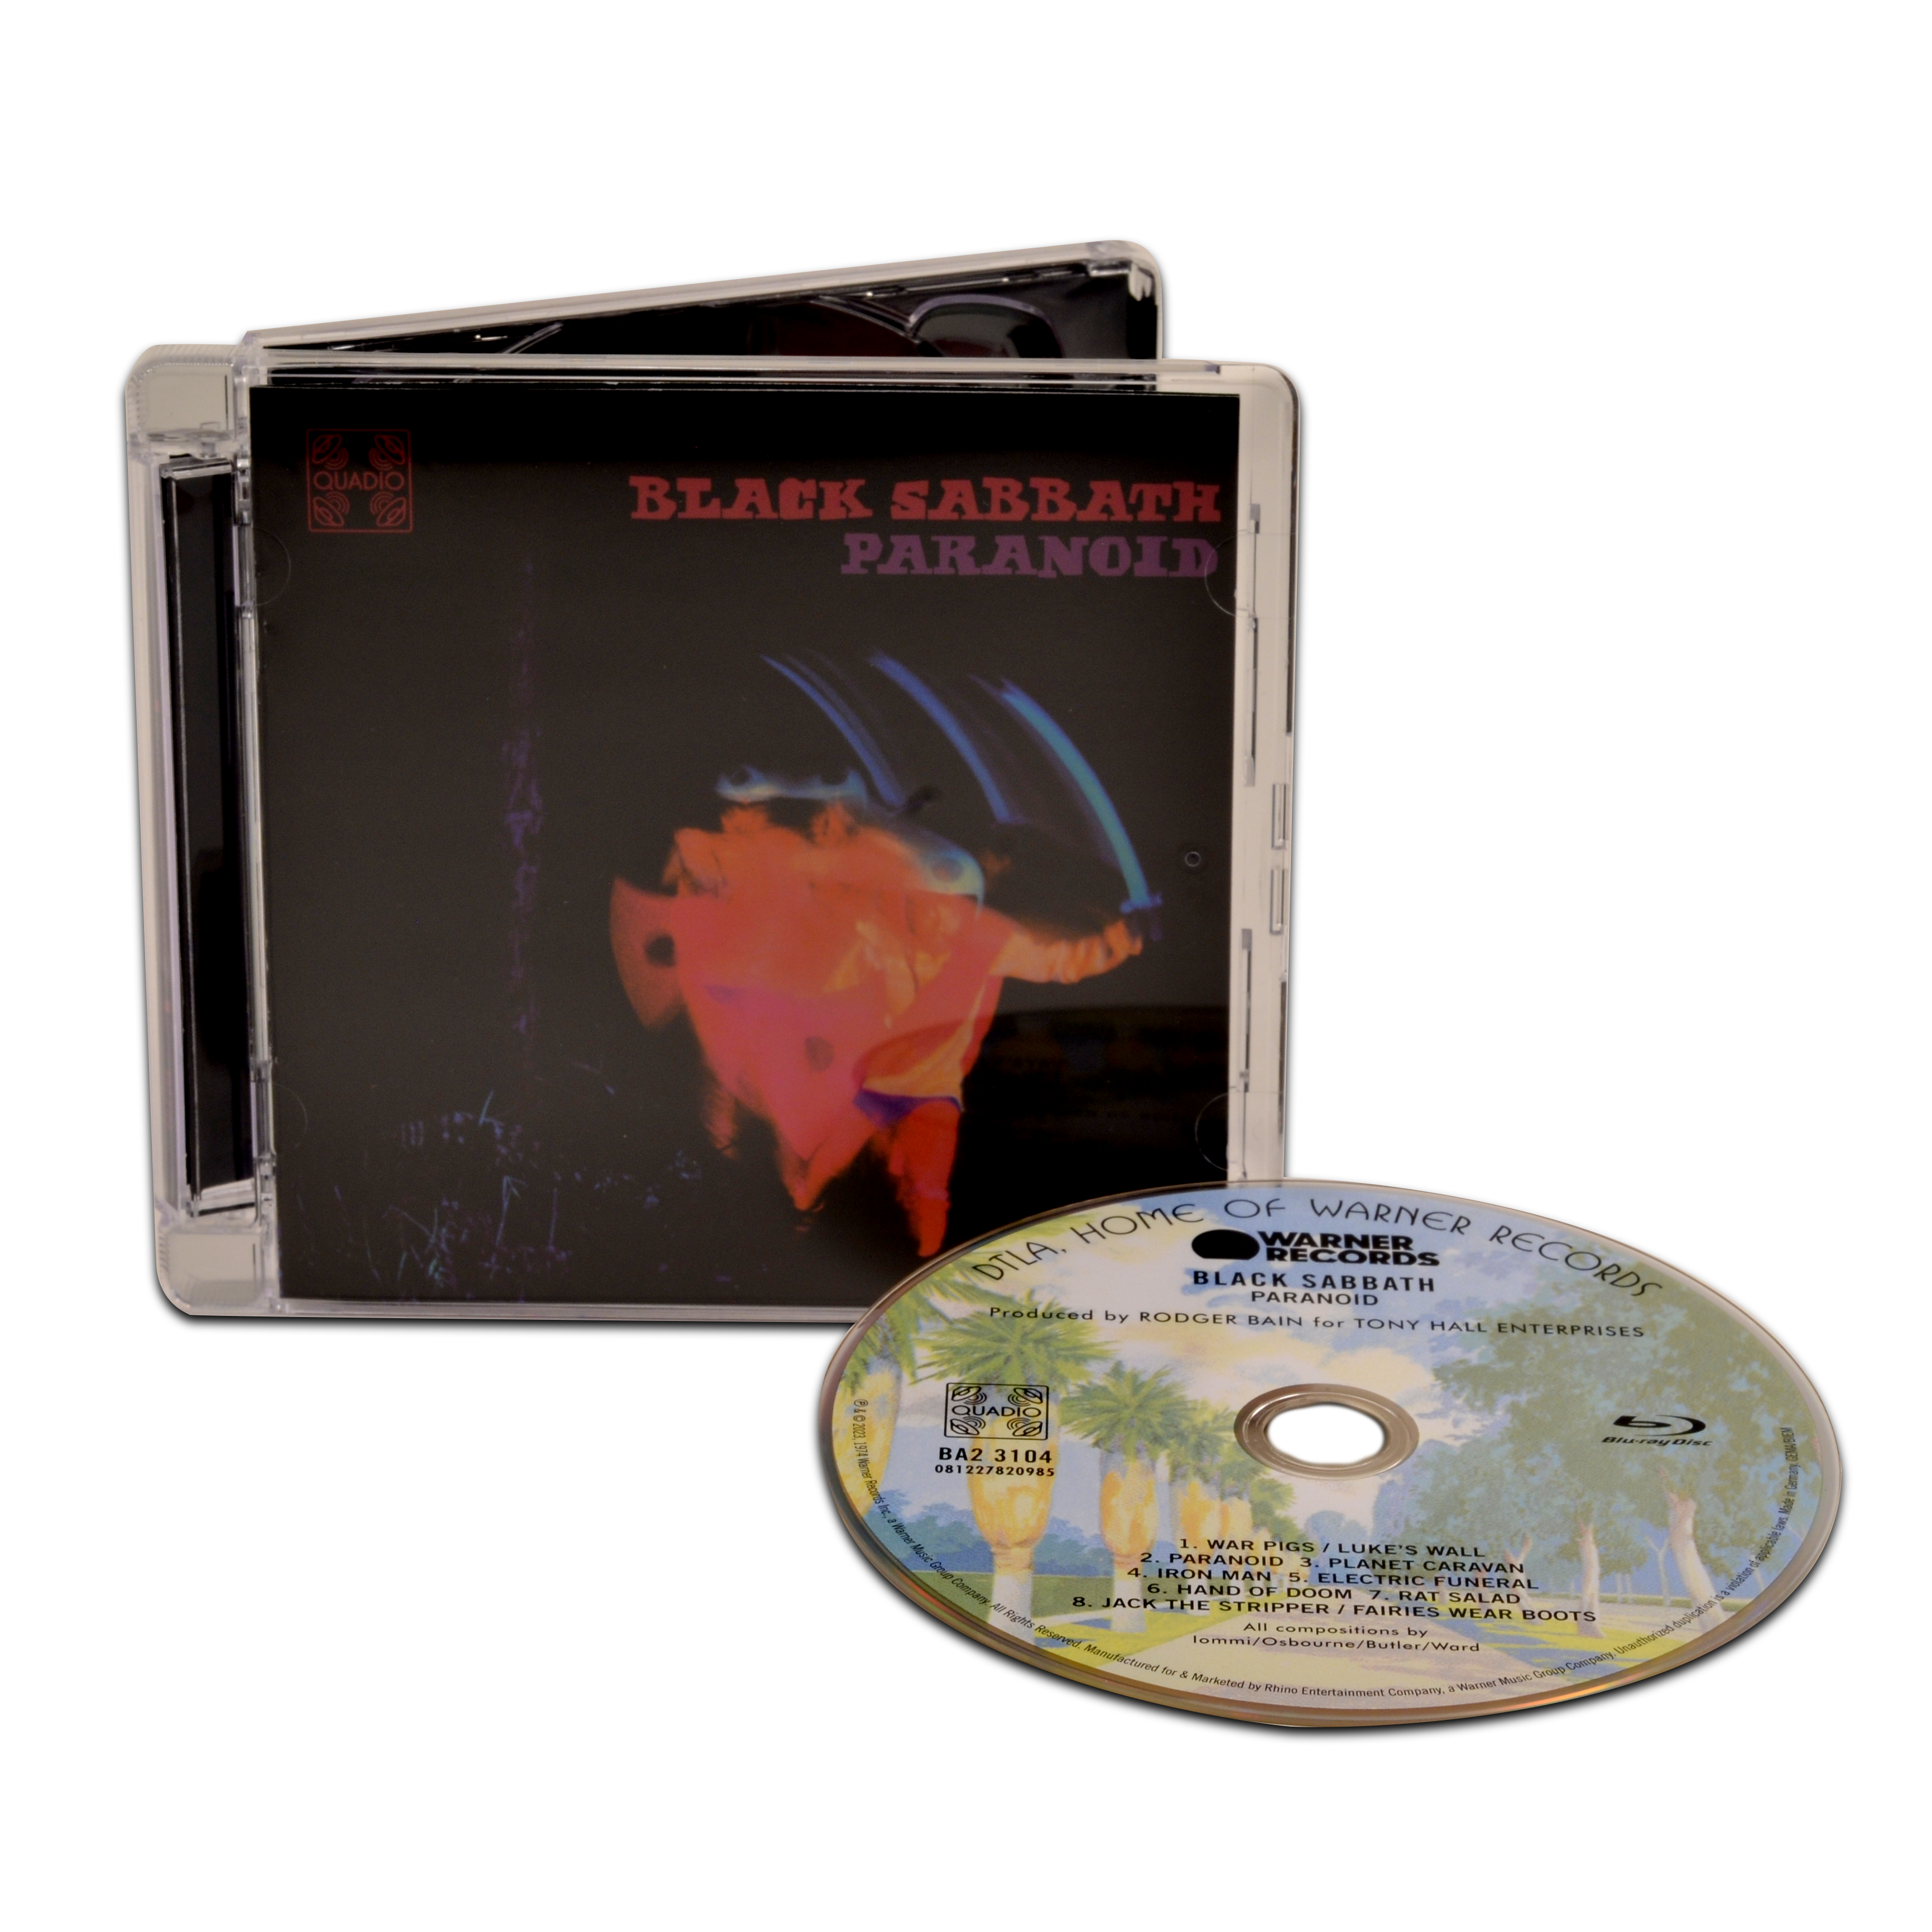 Classic Albums Covered - Black Sabbath - XRaydio